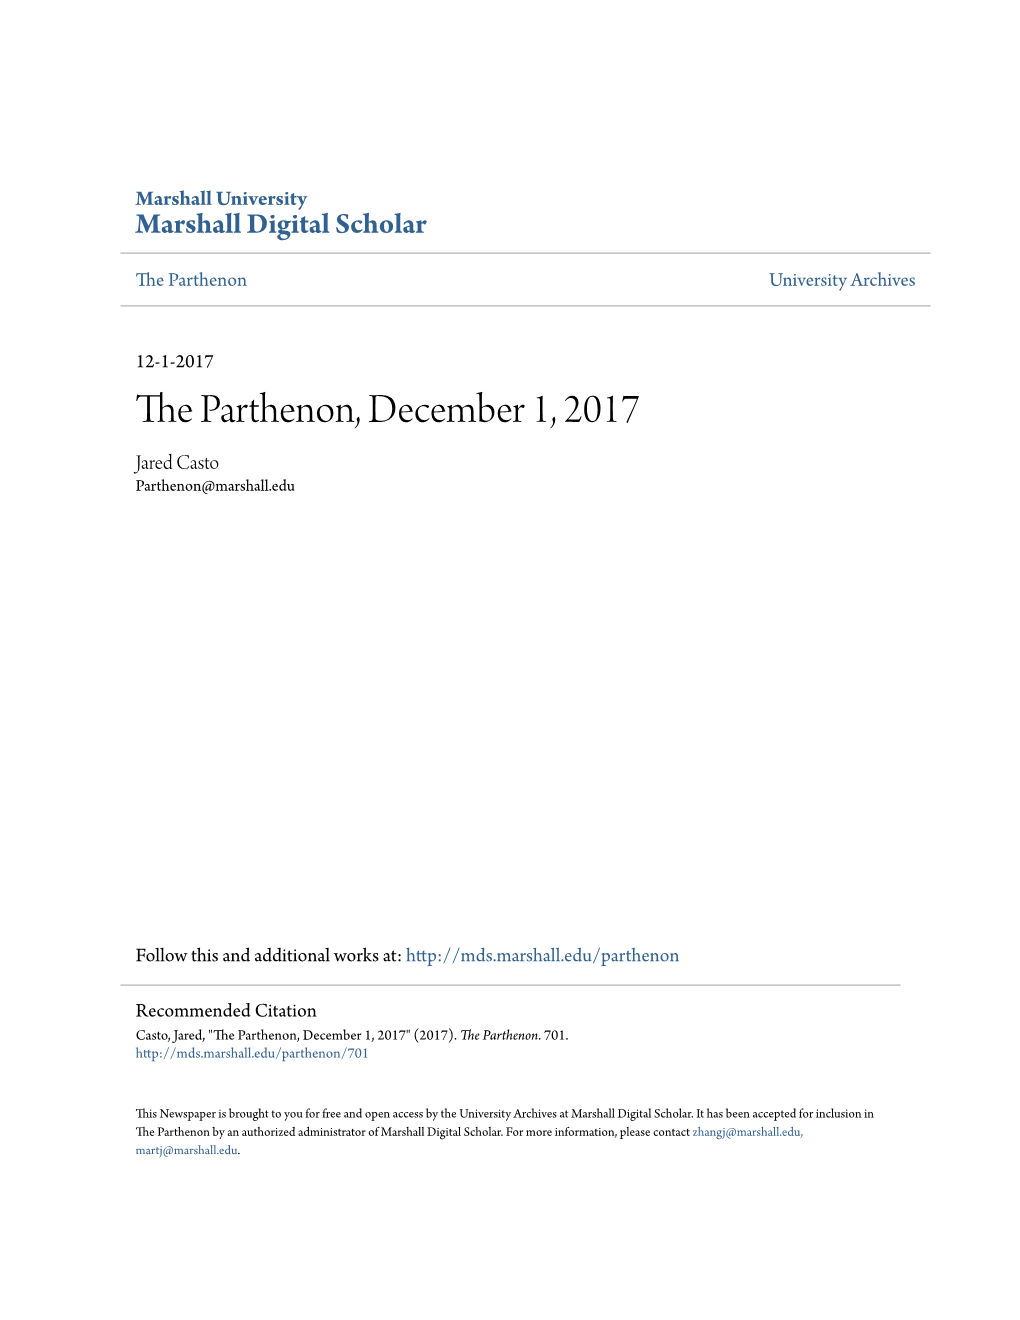 The Parthenon, December 1, 2017